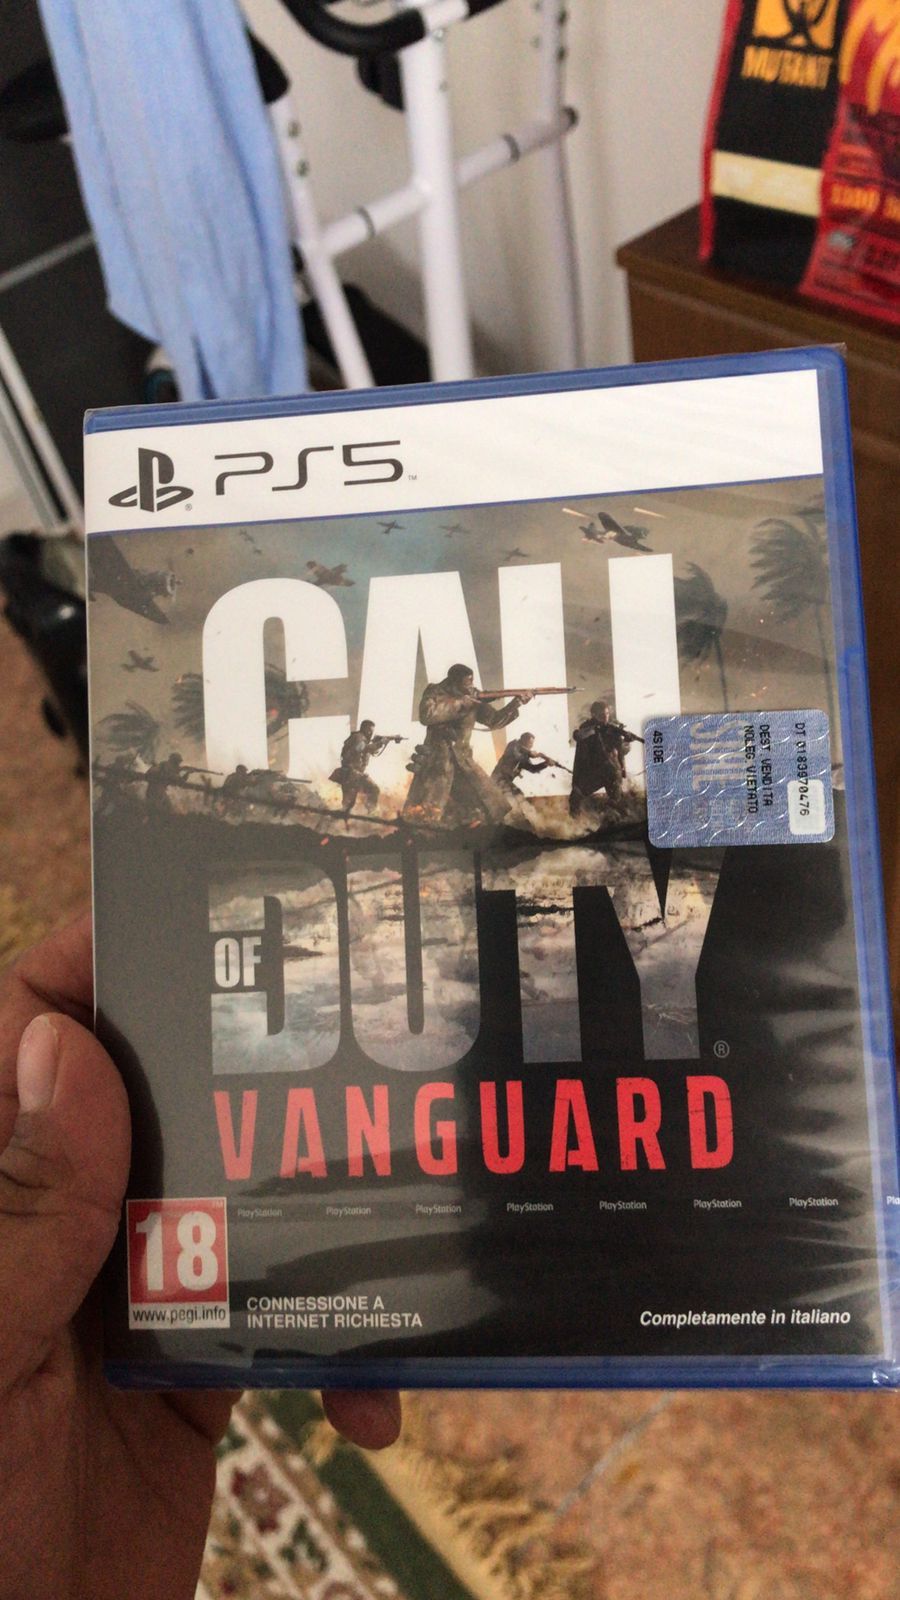 Call of Duty vanguard. Gta 5